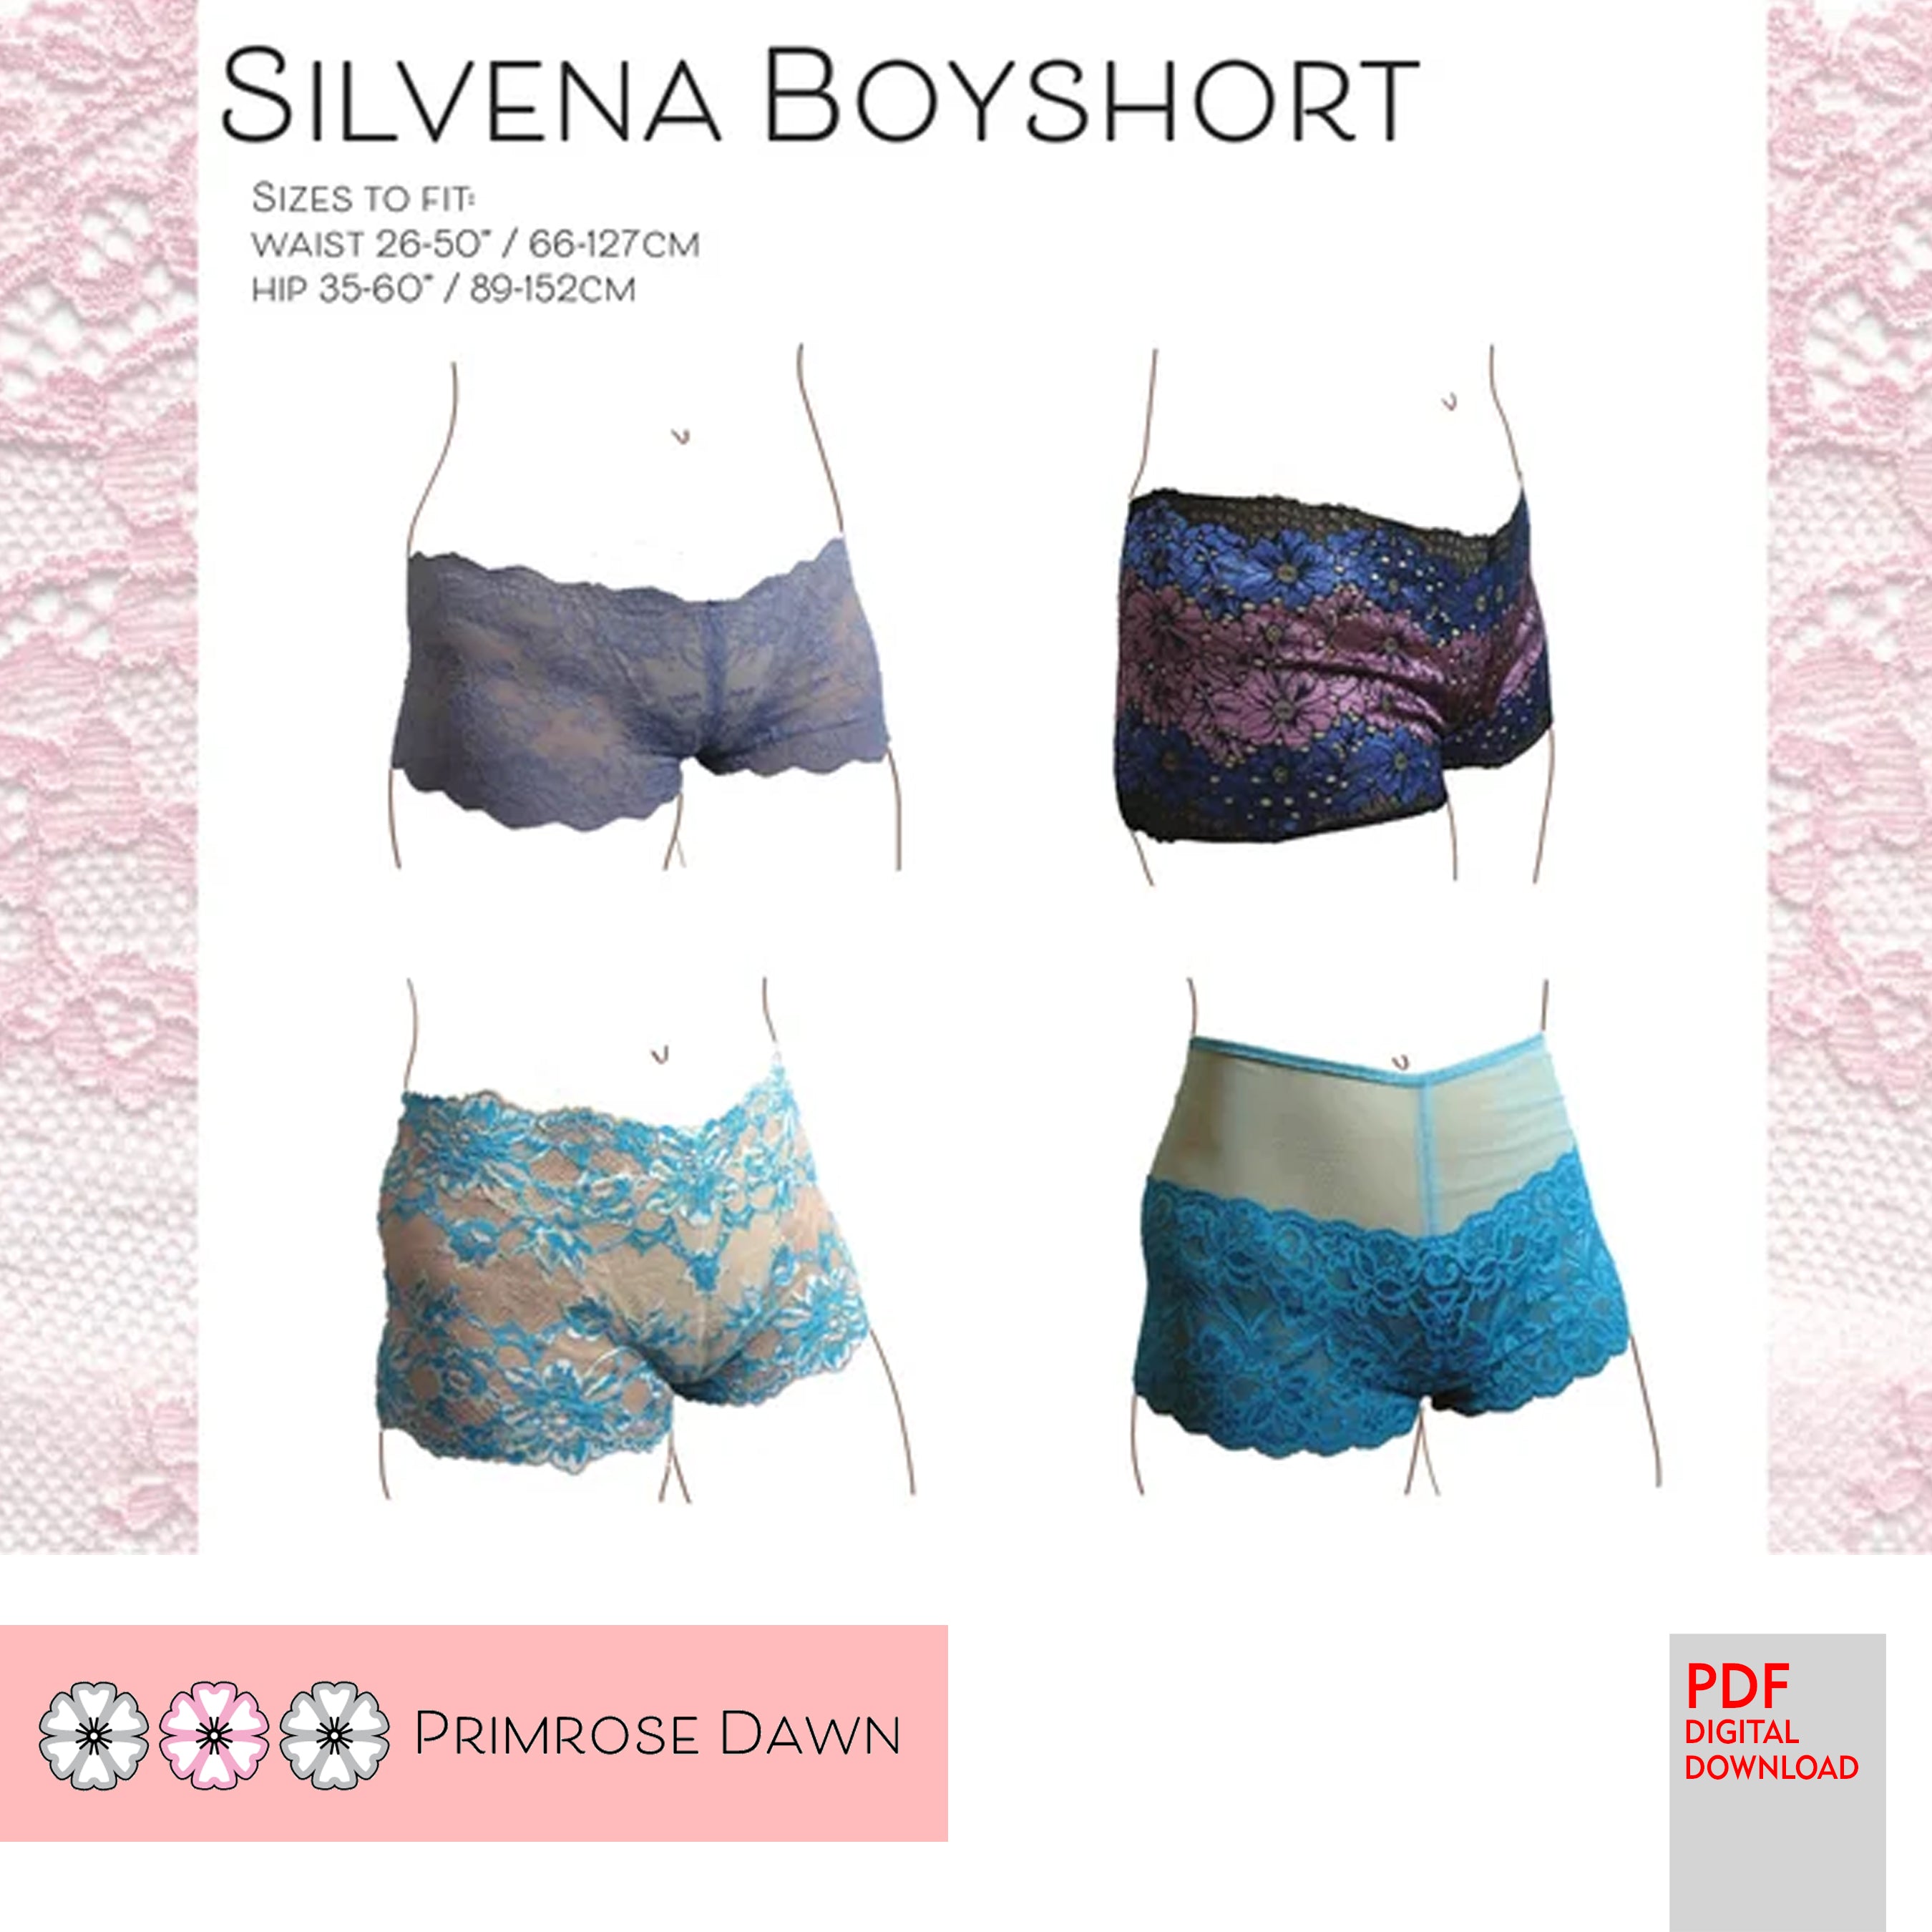 PDF Primrose Dawn Sewing Pattern- Silvena Boyshort